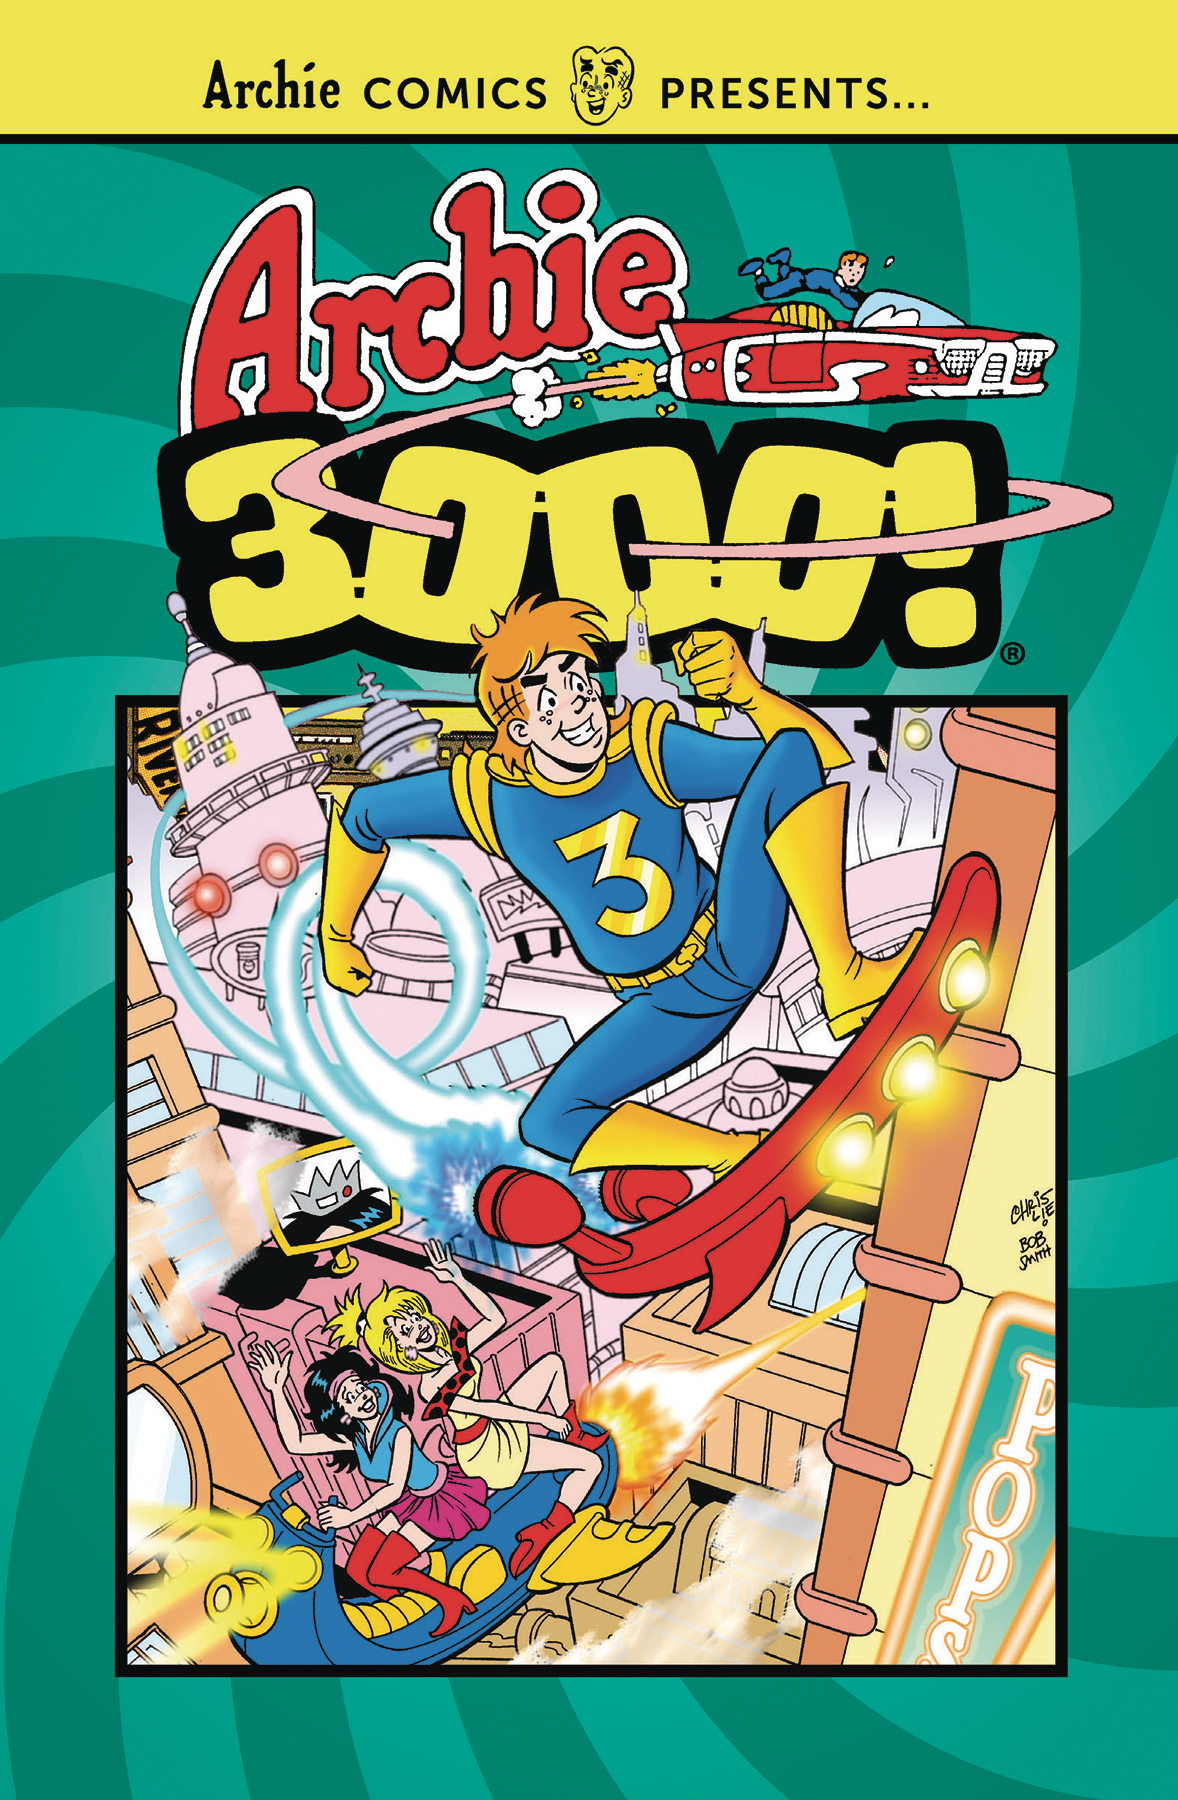 Archie 3000 Graphic Novel